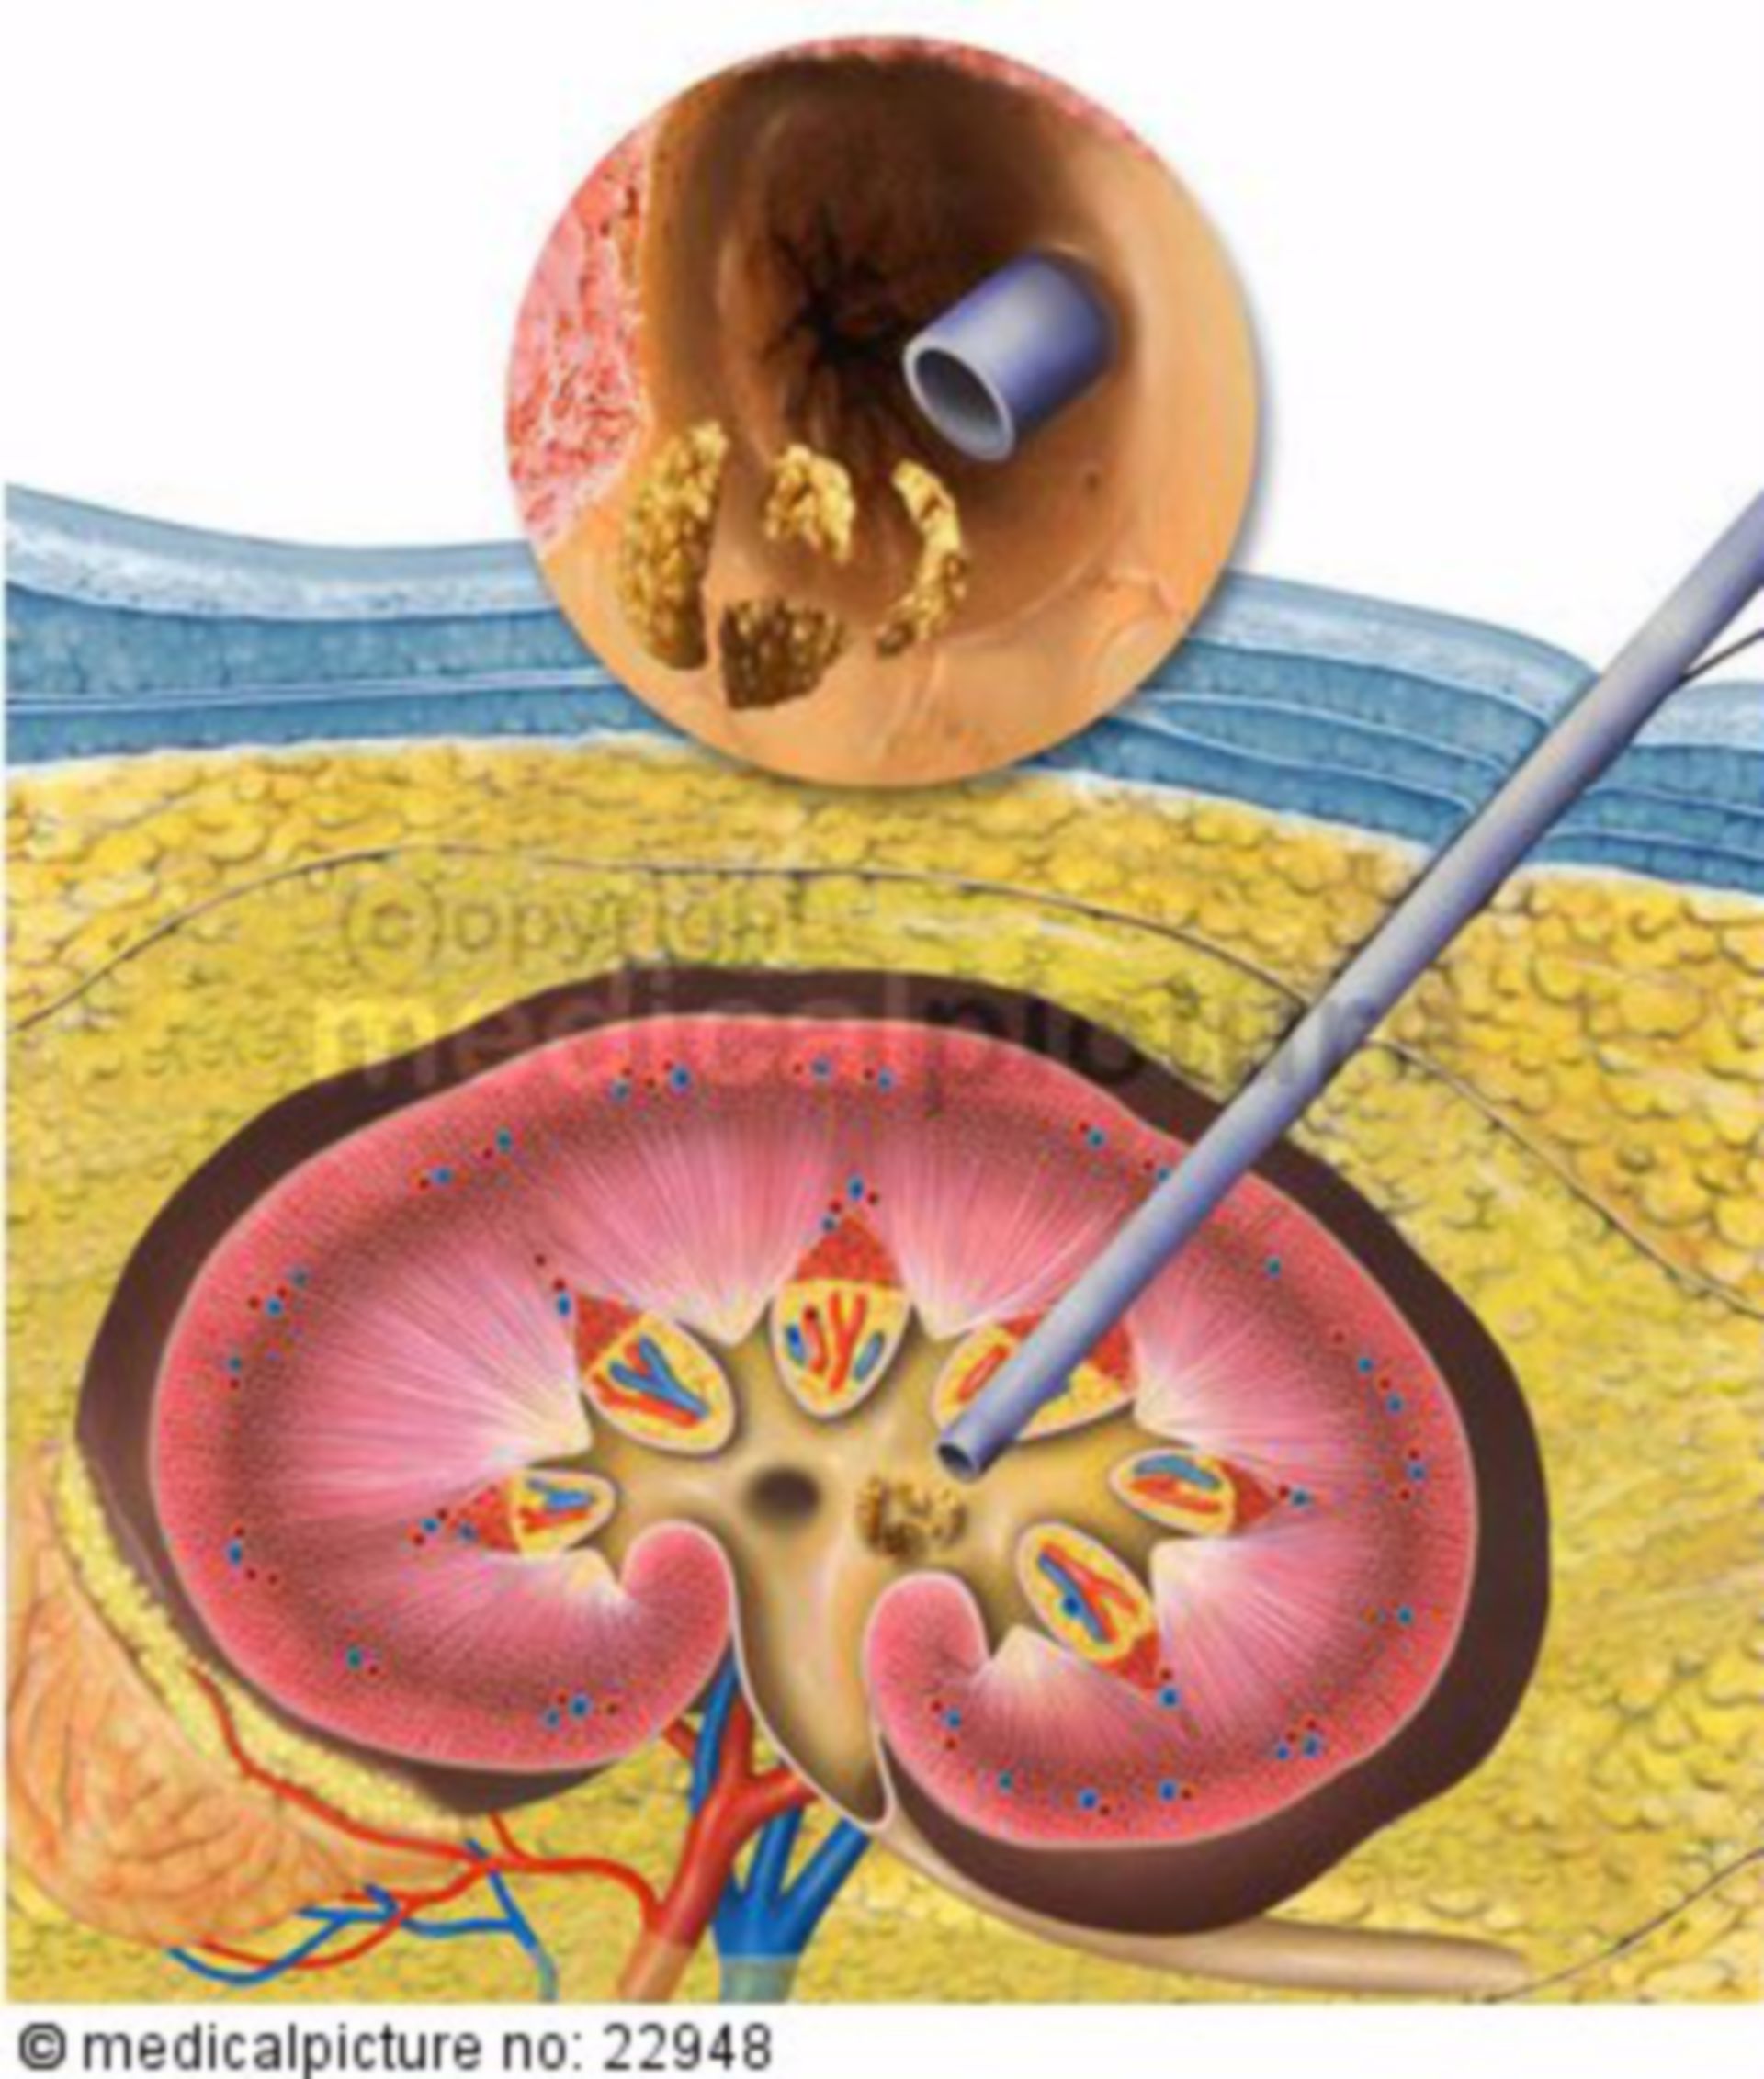 Kidney stone destruction in case of nephrolithiasis, kidney